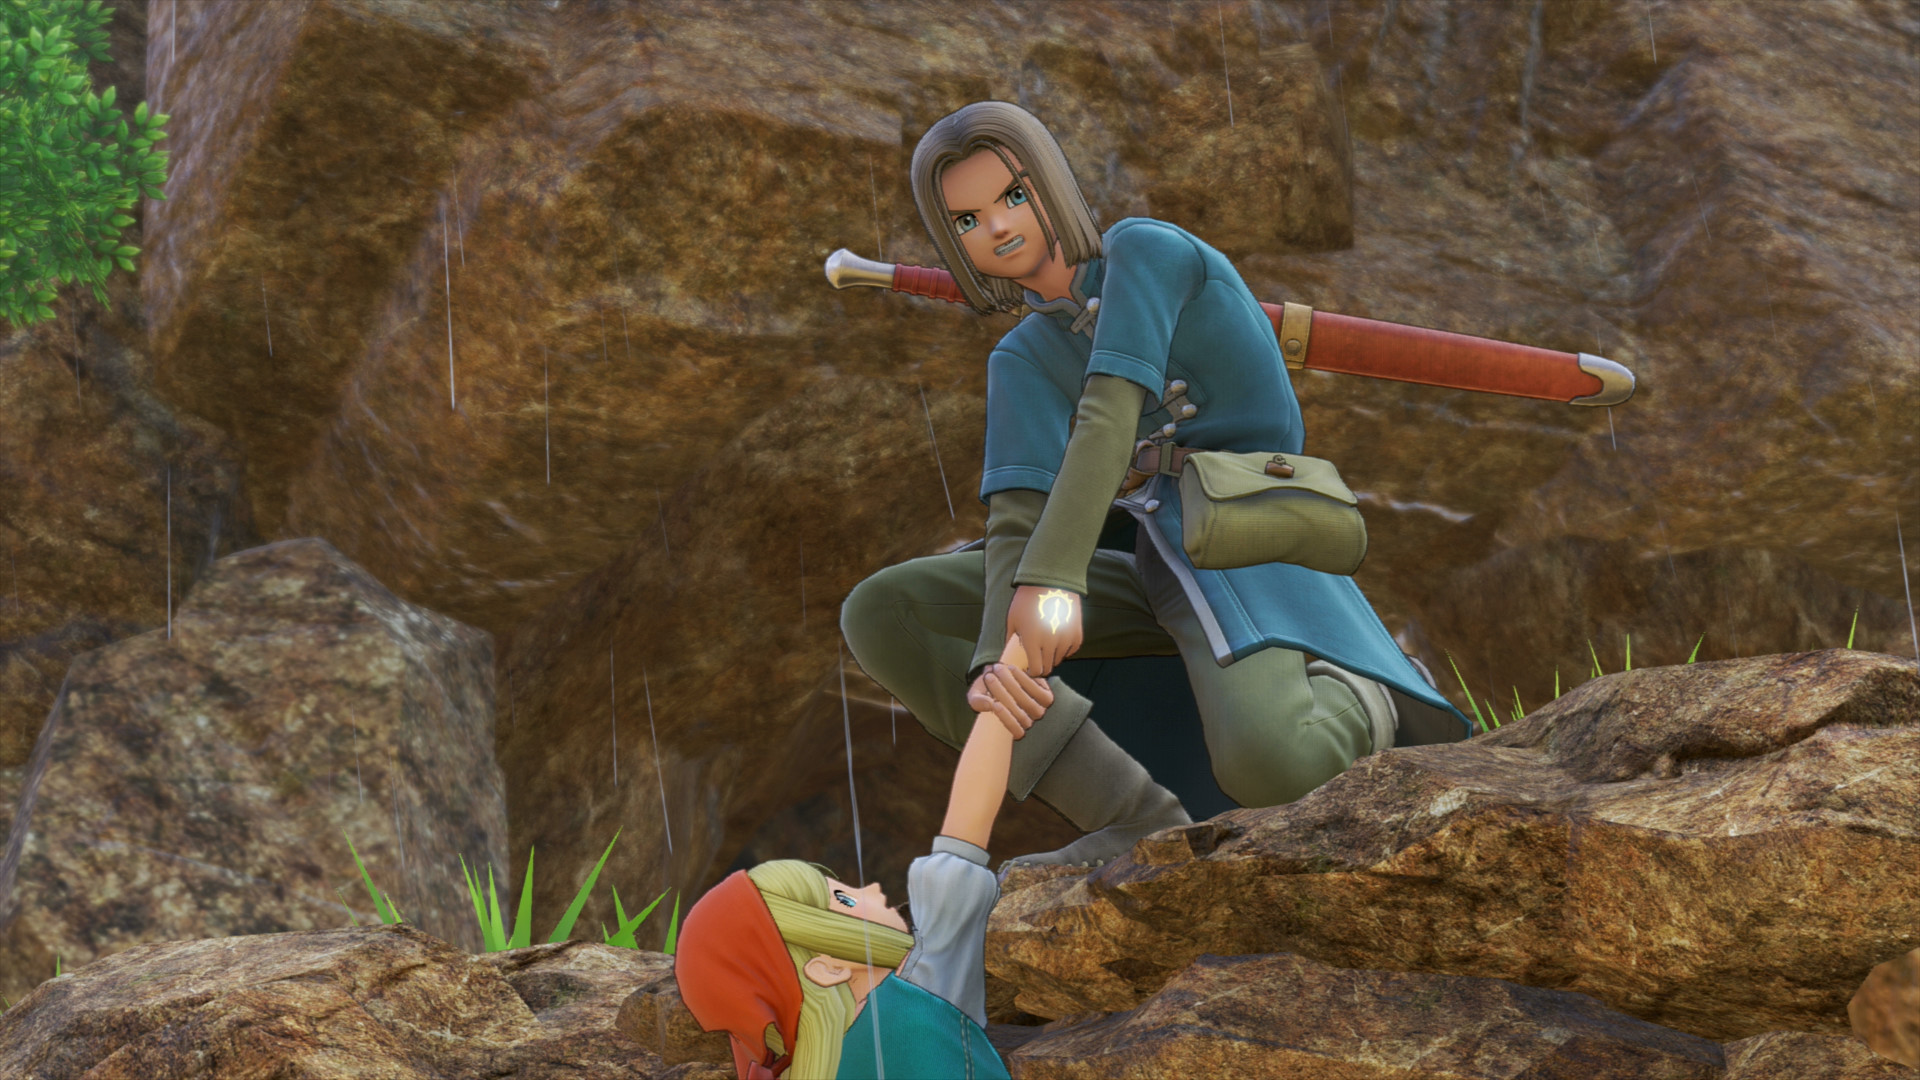 Game Anime Terbaik: Dragon Quest XI. Gambar menunjukkan seorang anak laki -laki menarik seorang gadis ke atas langkan berbatu